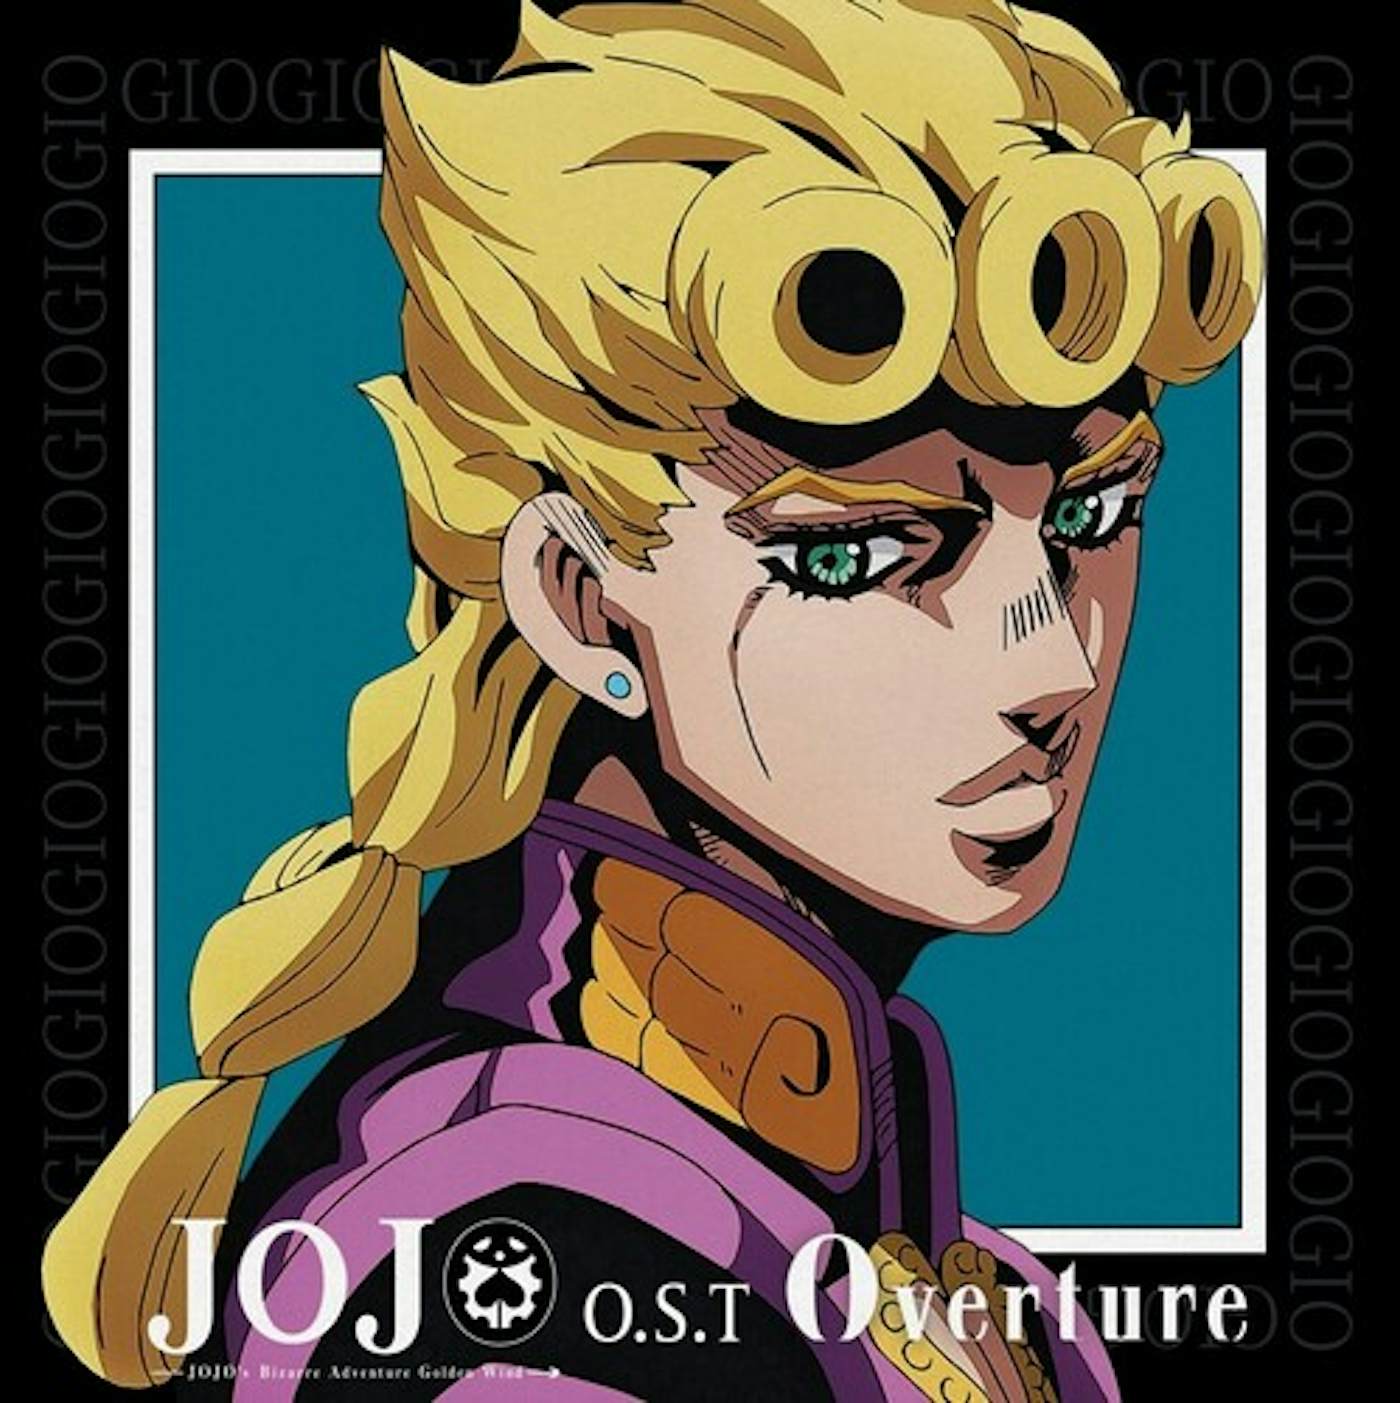 JOJO'S BIZARRE ADVENTURE -STONE OCEAN O.S.T. - Album by Yugo Kanno